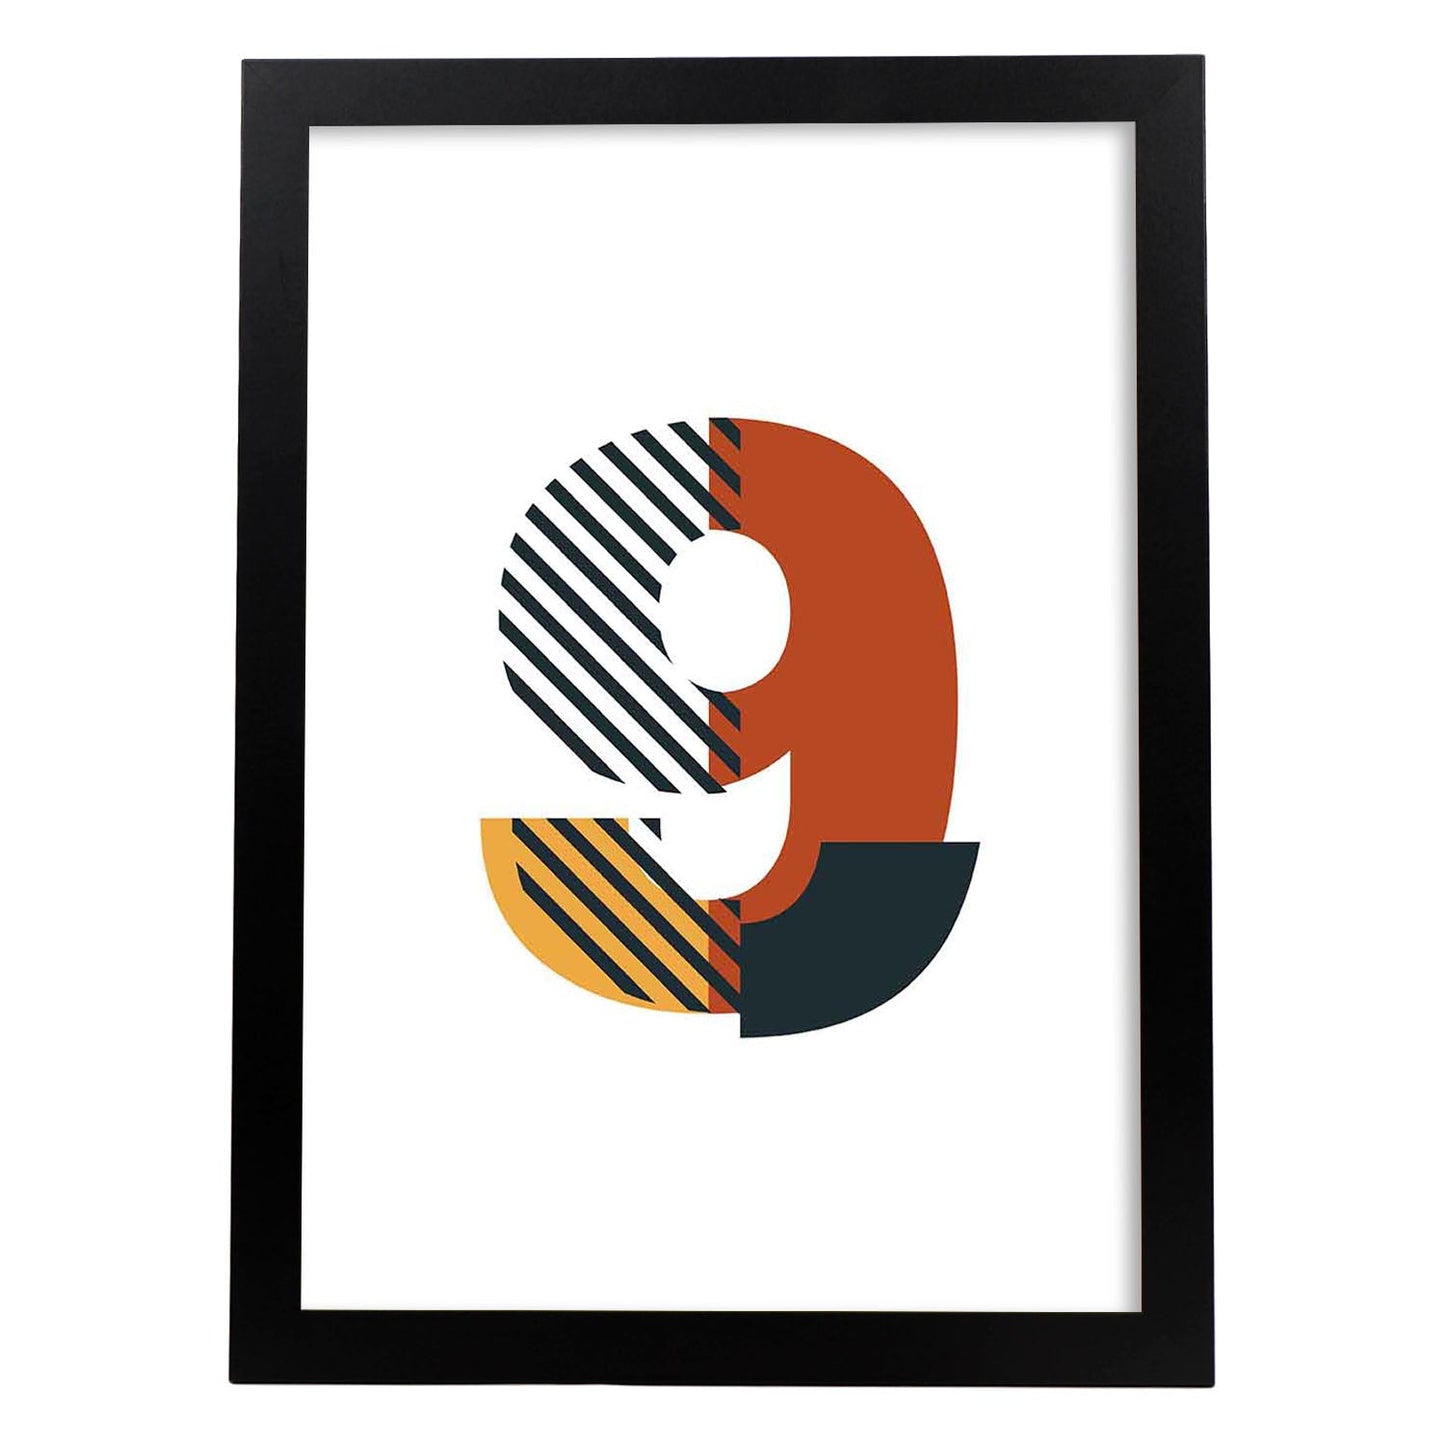 Poster de número 9. Lámina estilo Geometria con imágenes del alfabeto.-Artwork-Nacnic-A4-Marco Negro-Nacnic Estudio SL